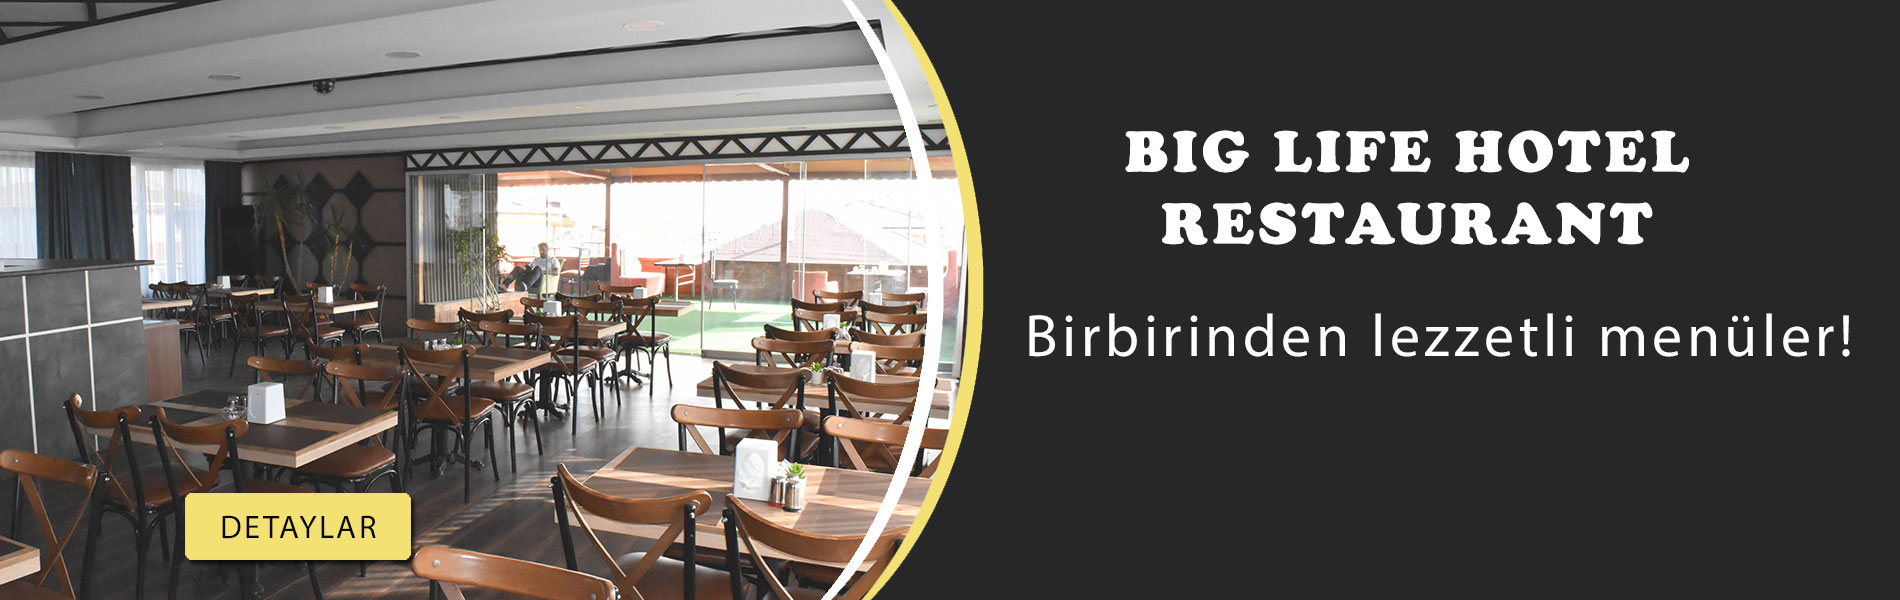 Big Life Hotel - Restaurant ve Kafe